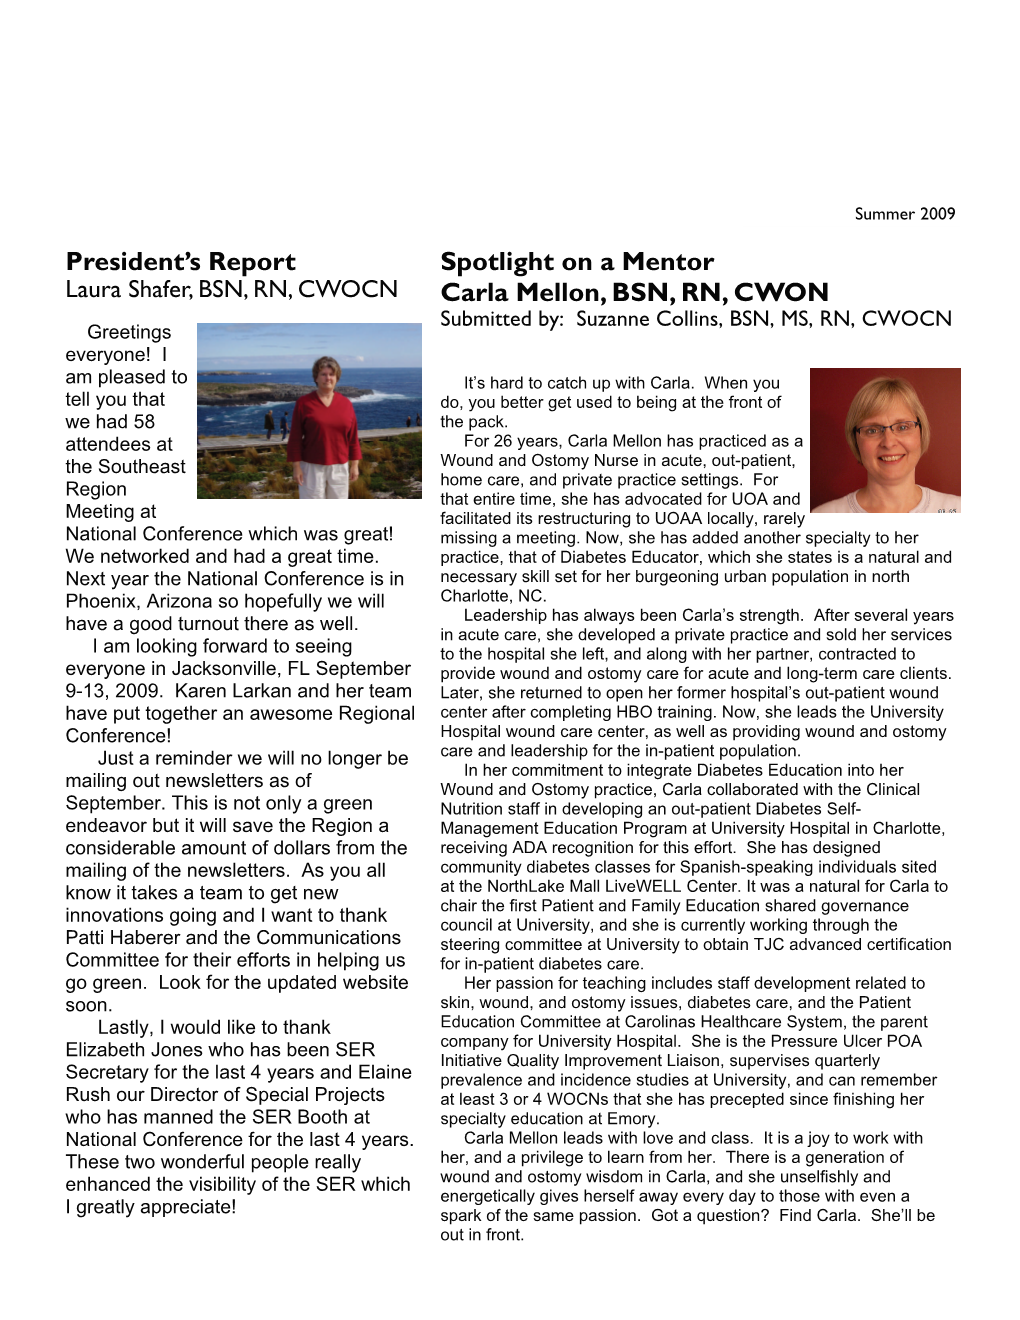 President's Report Spotlight on a Mentor Carla Mellon, BSN, RN